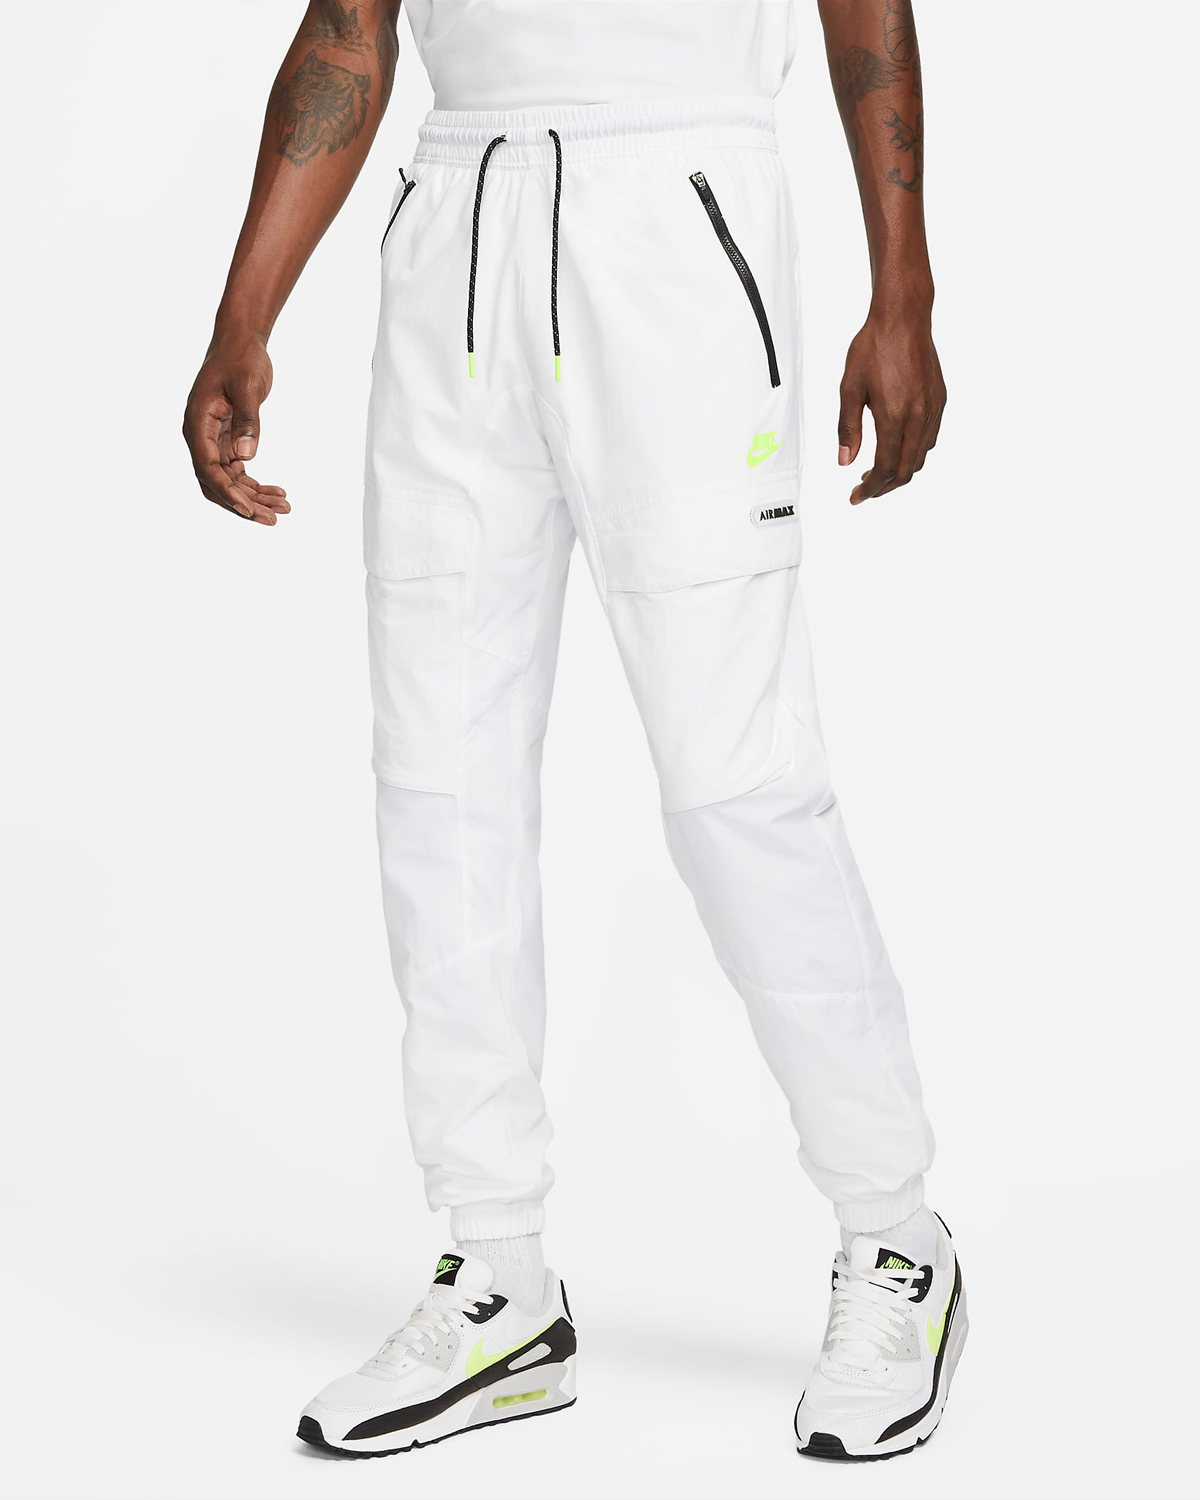 Nike Sportswear Volt Shirts Hoodies Pants Sneaker Outfits